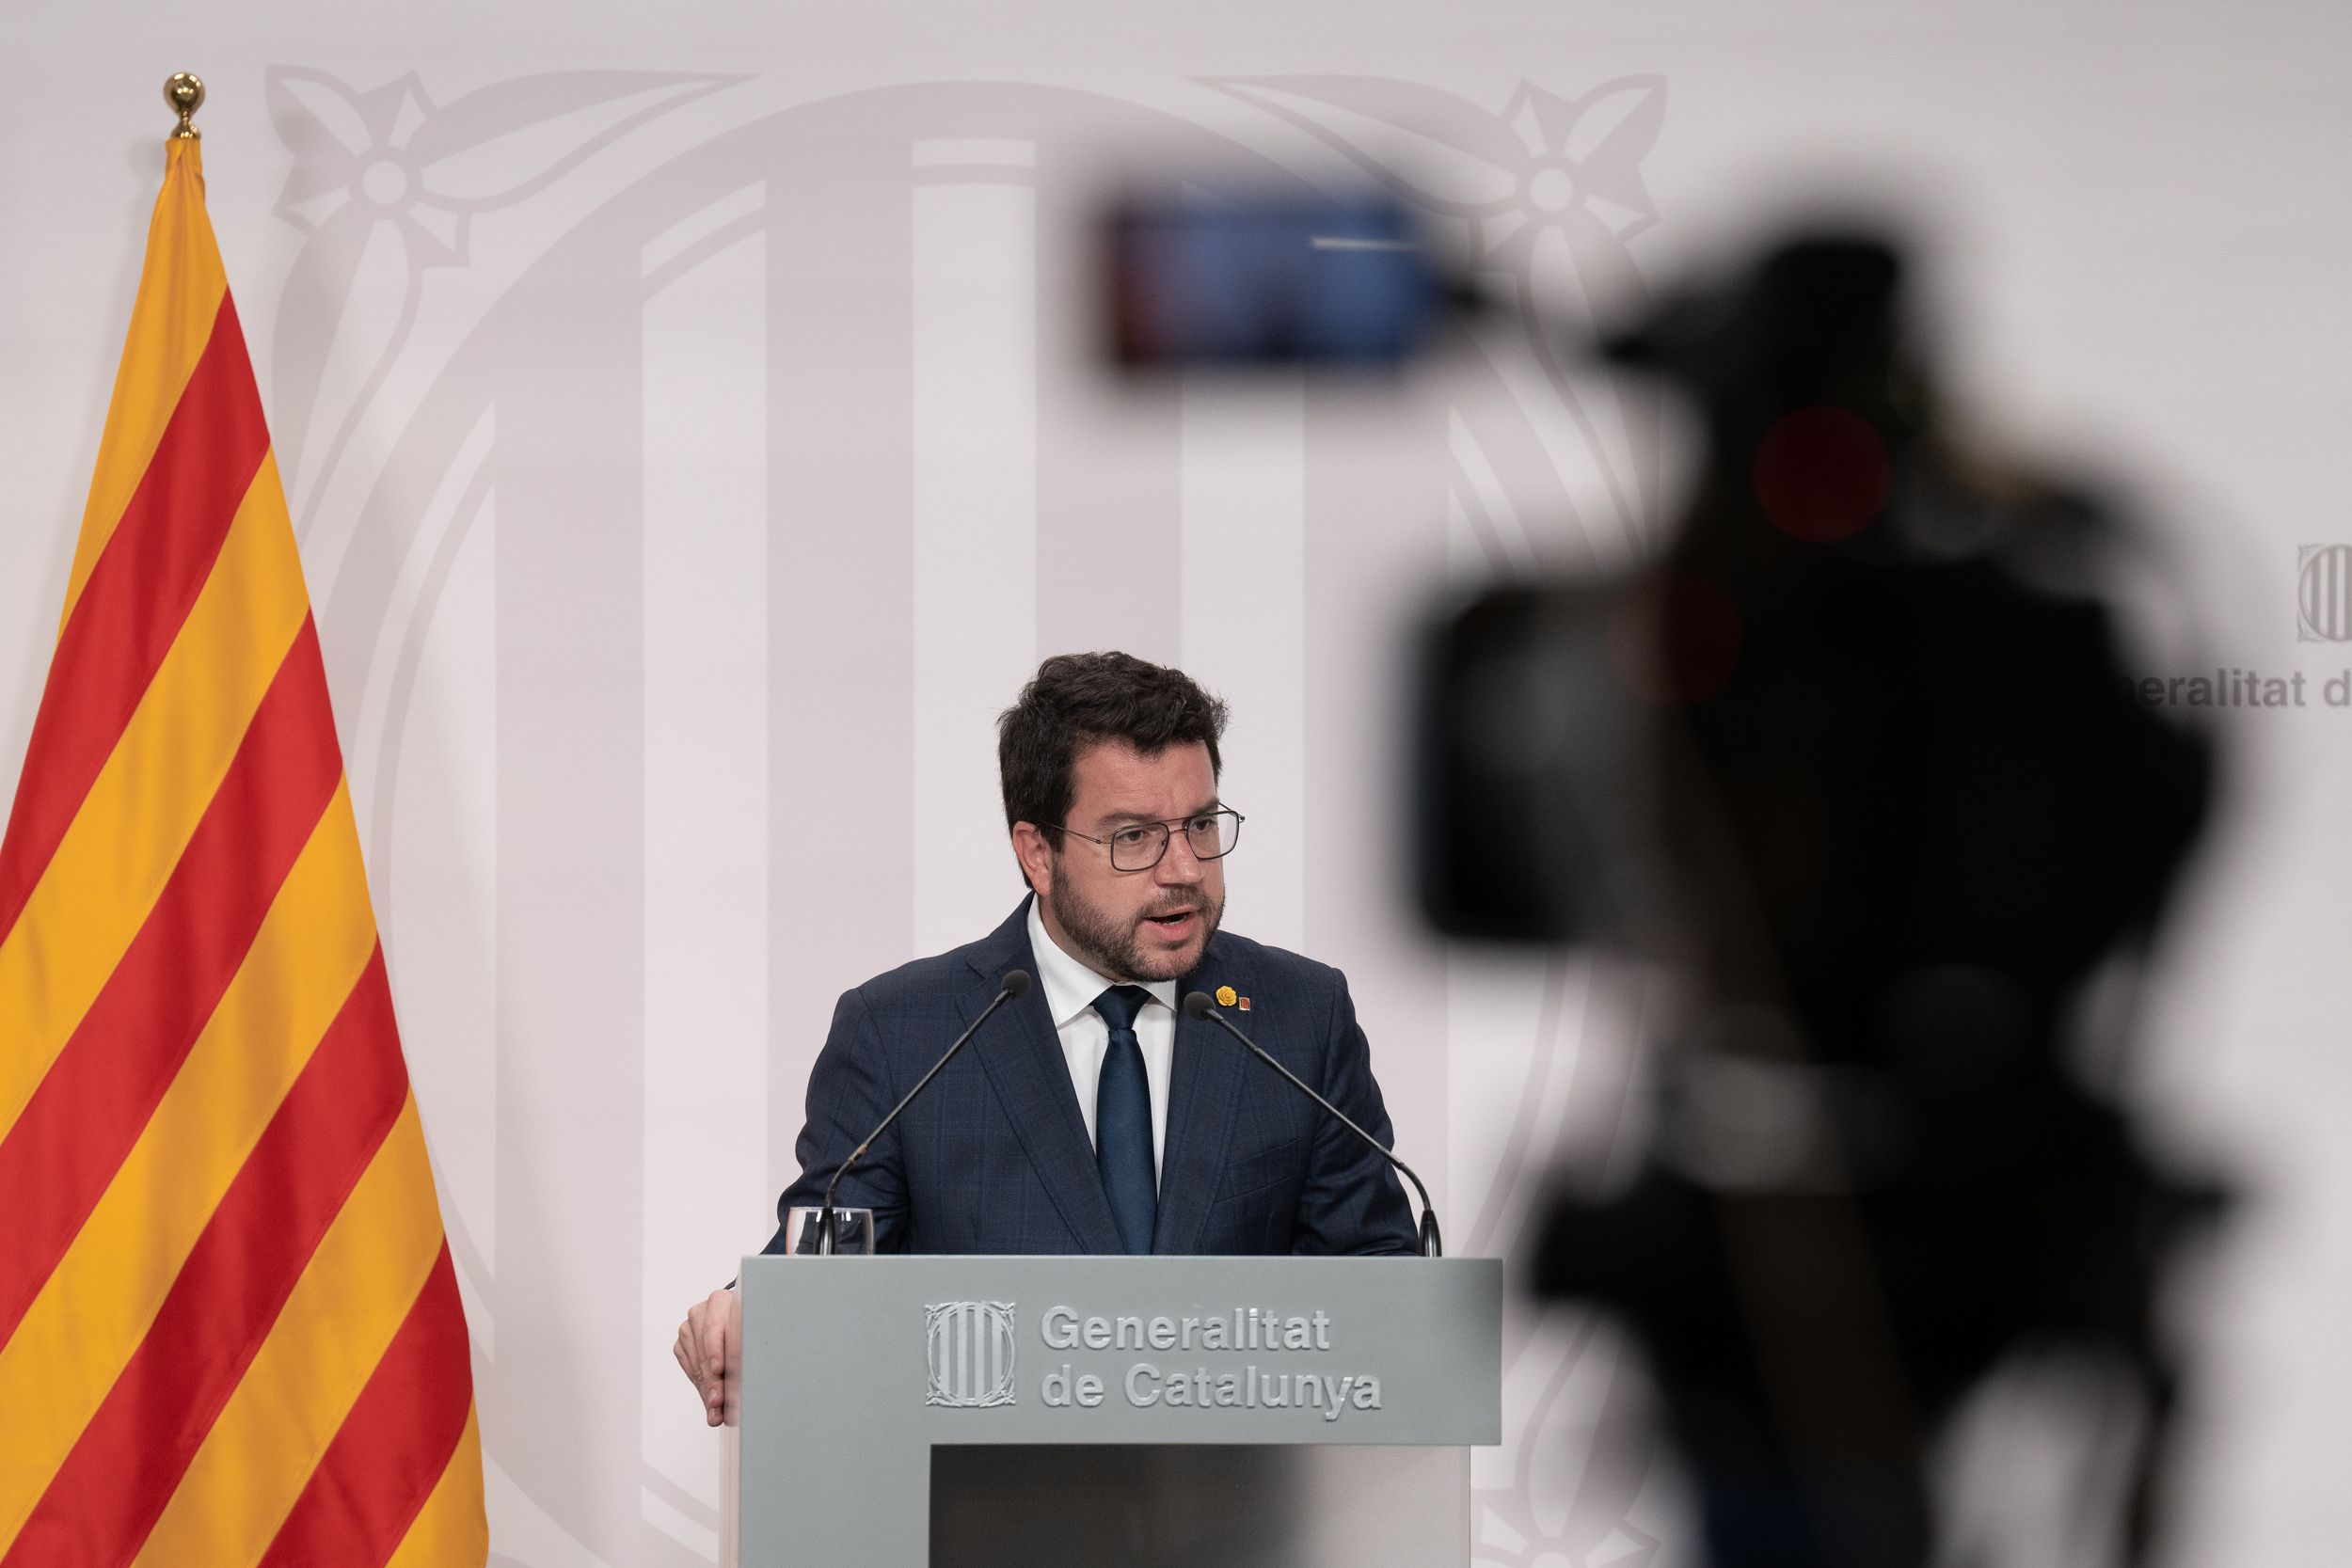 Aragonès pide a Sánchez que mueva ficha y deja claro el objetivo: un referéndum de independencia